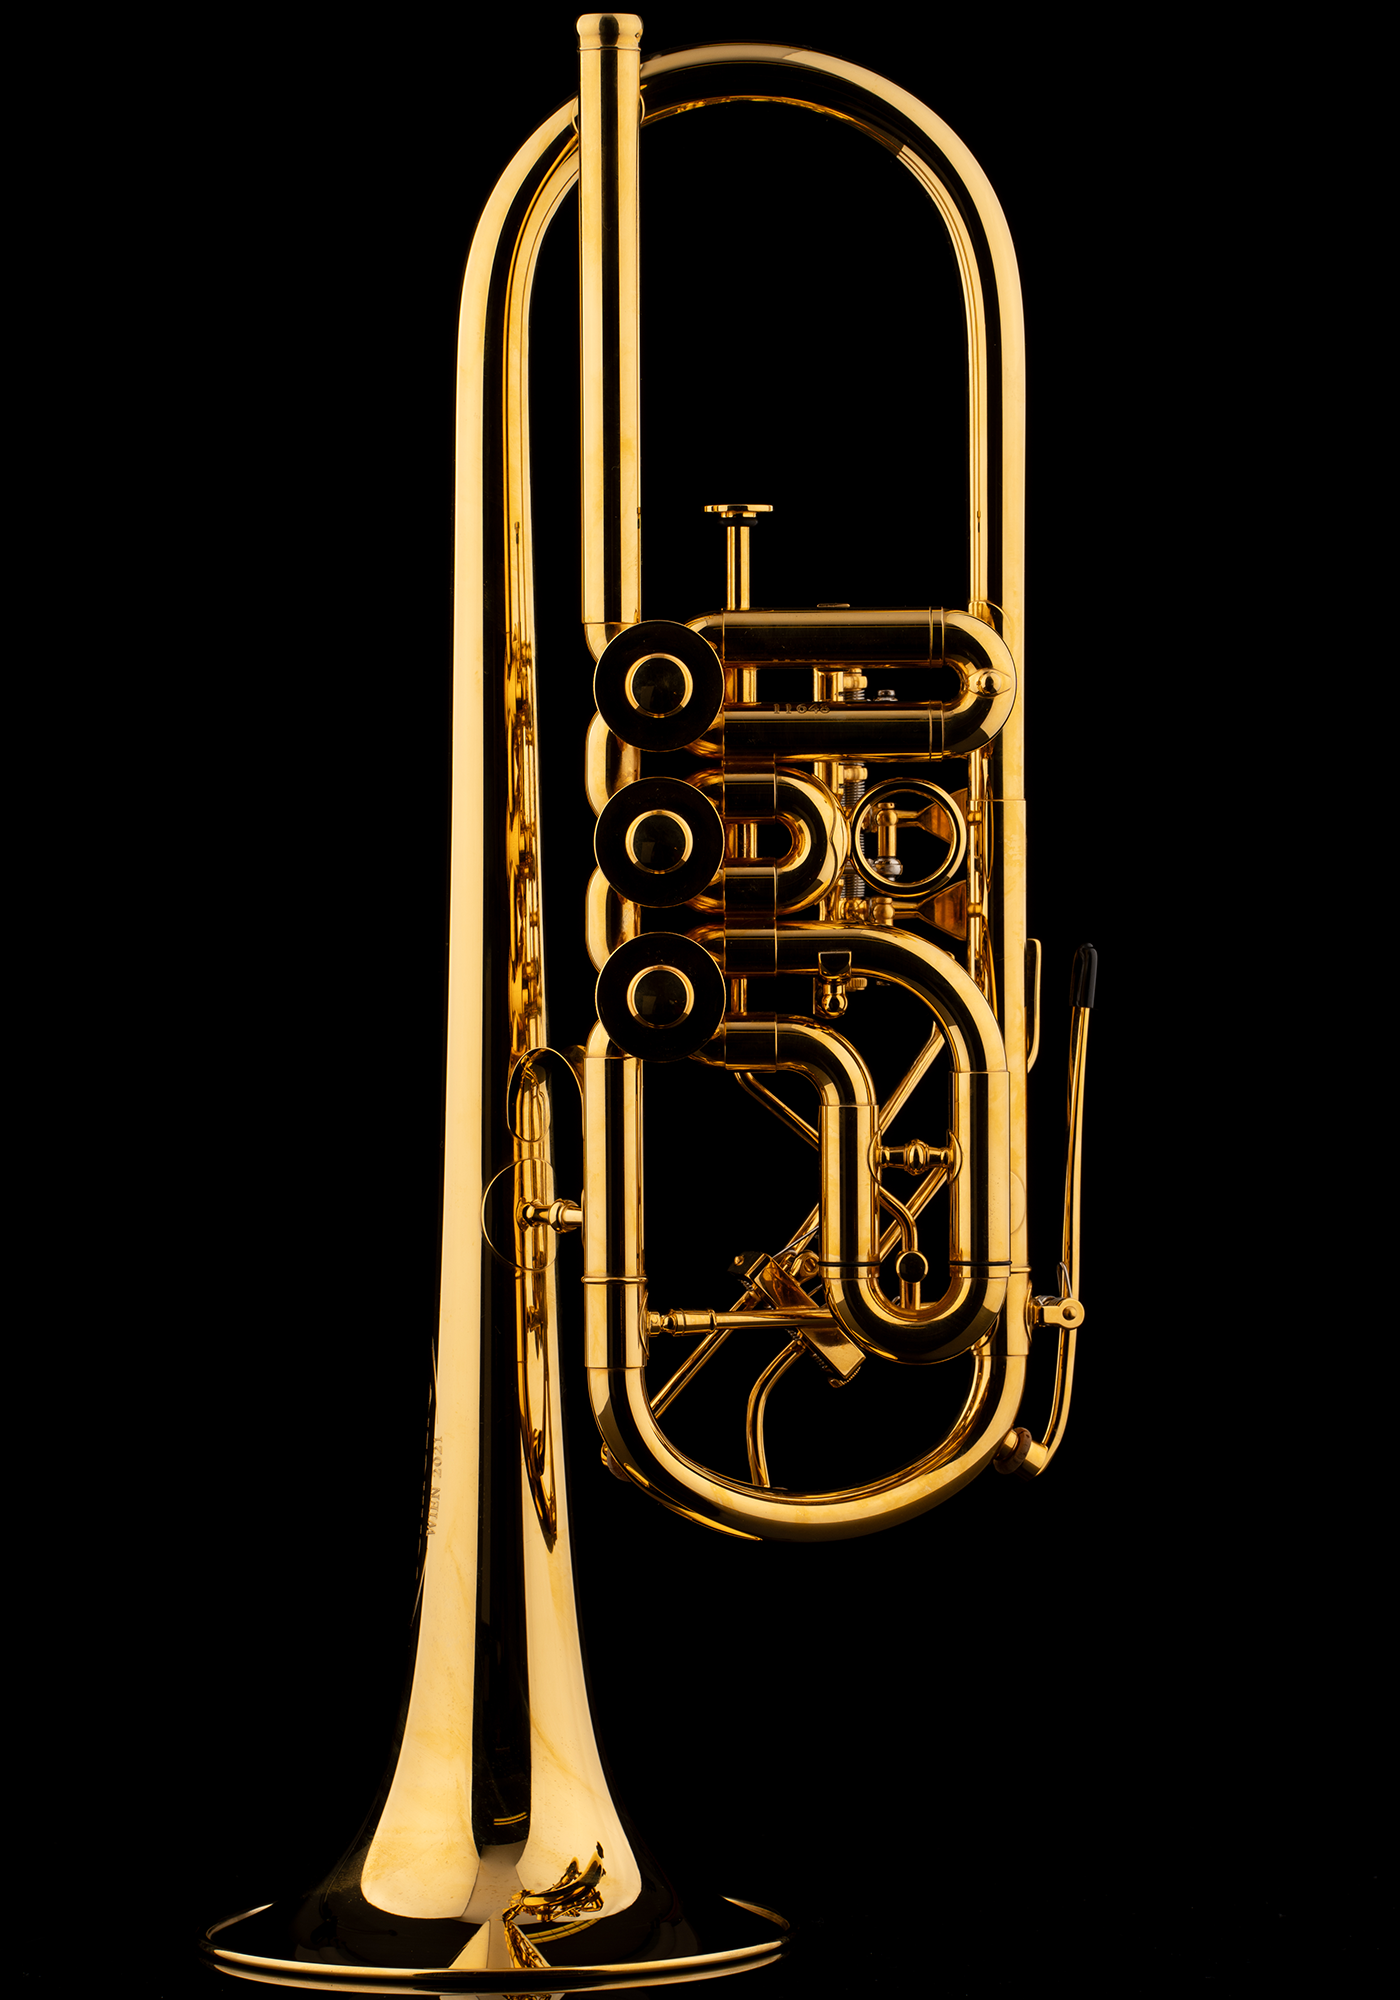 Schagerl C-Trumpet "WIEN 2021" gold plated